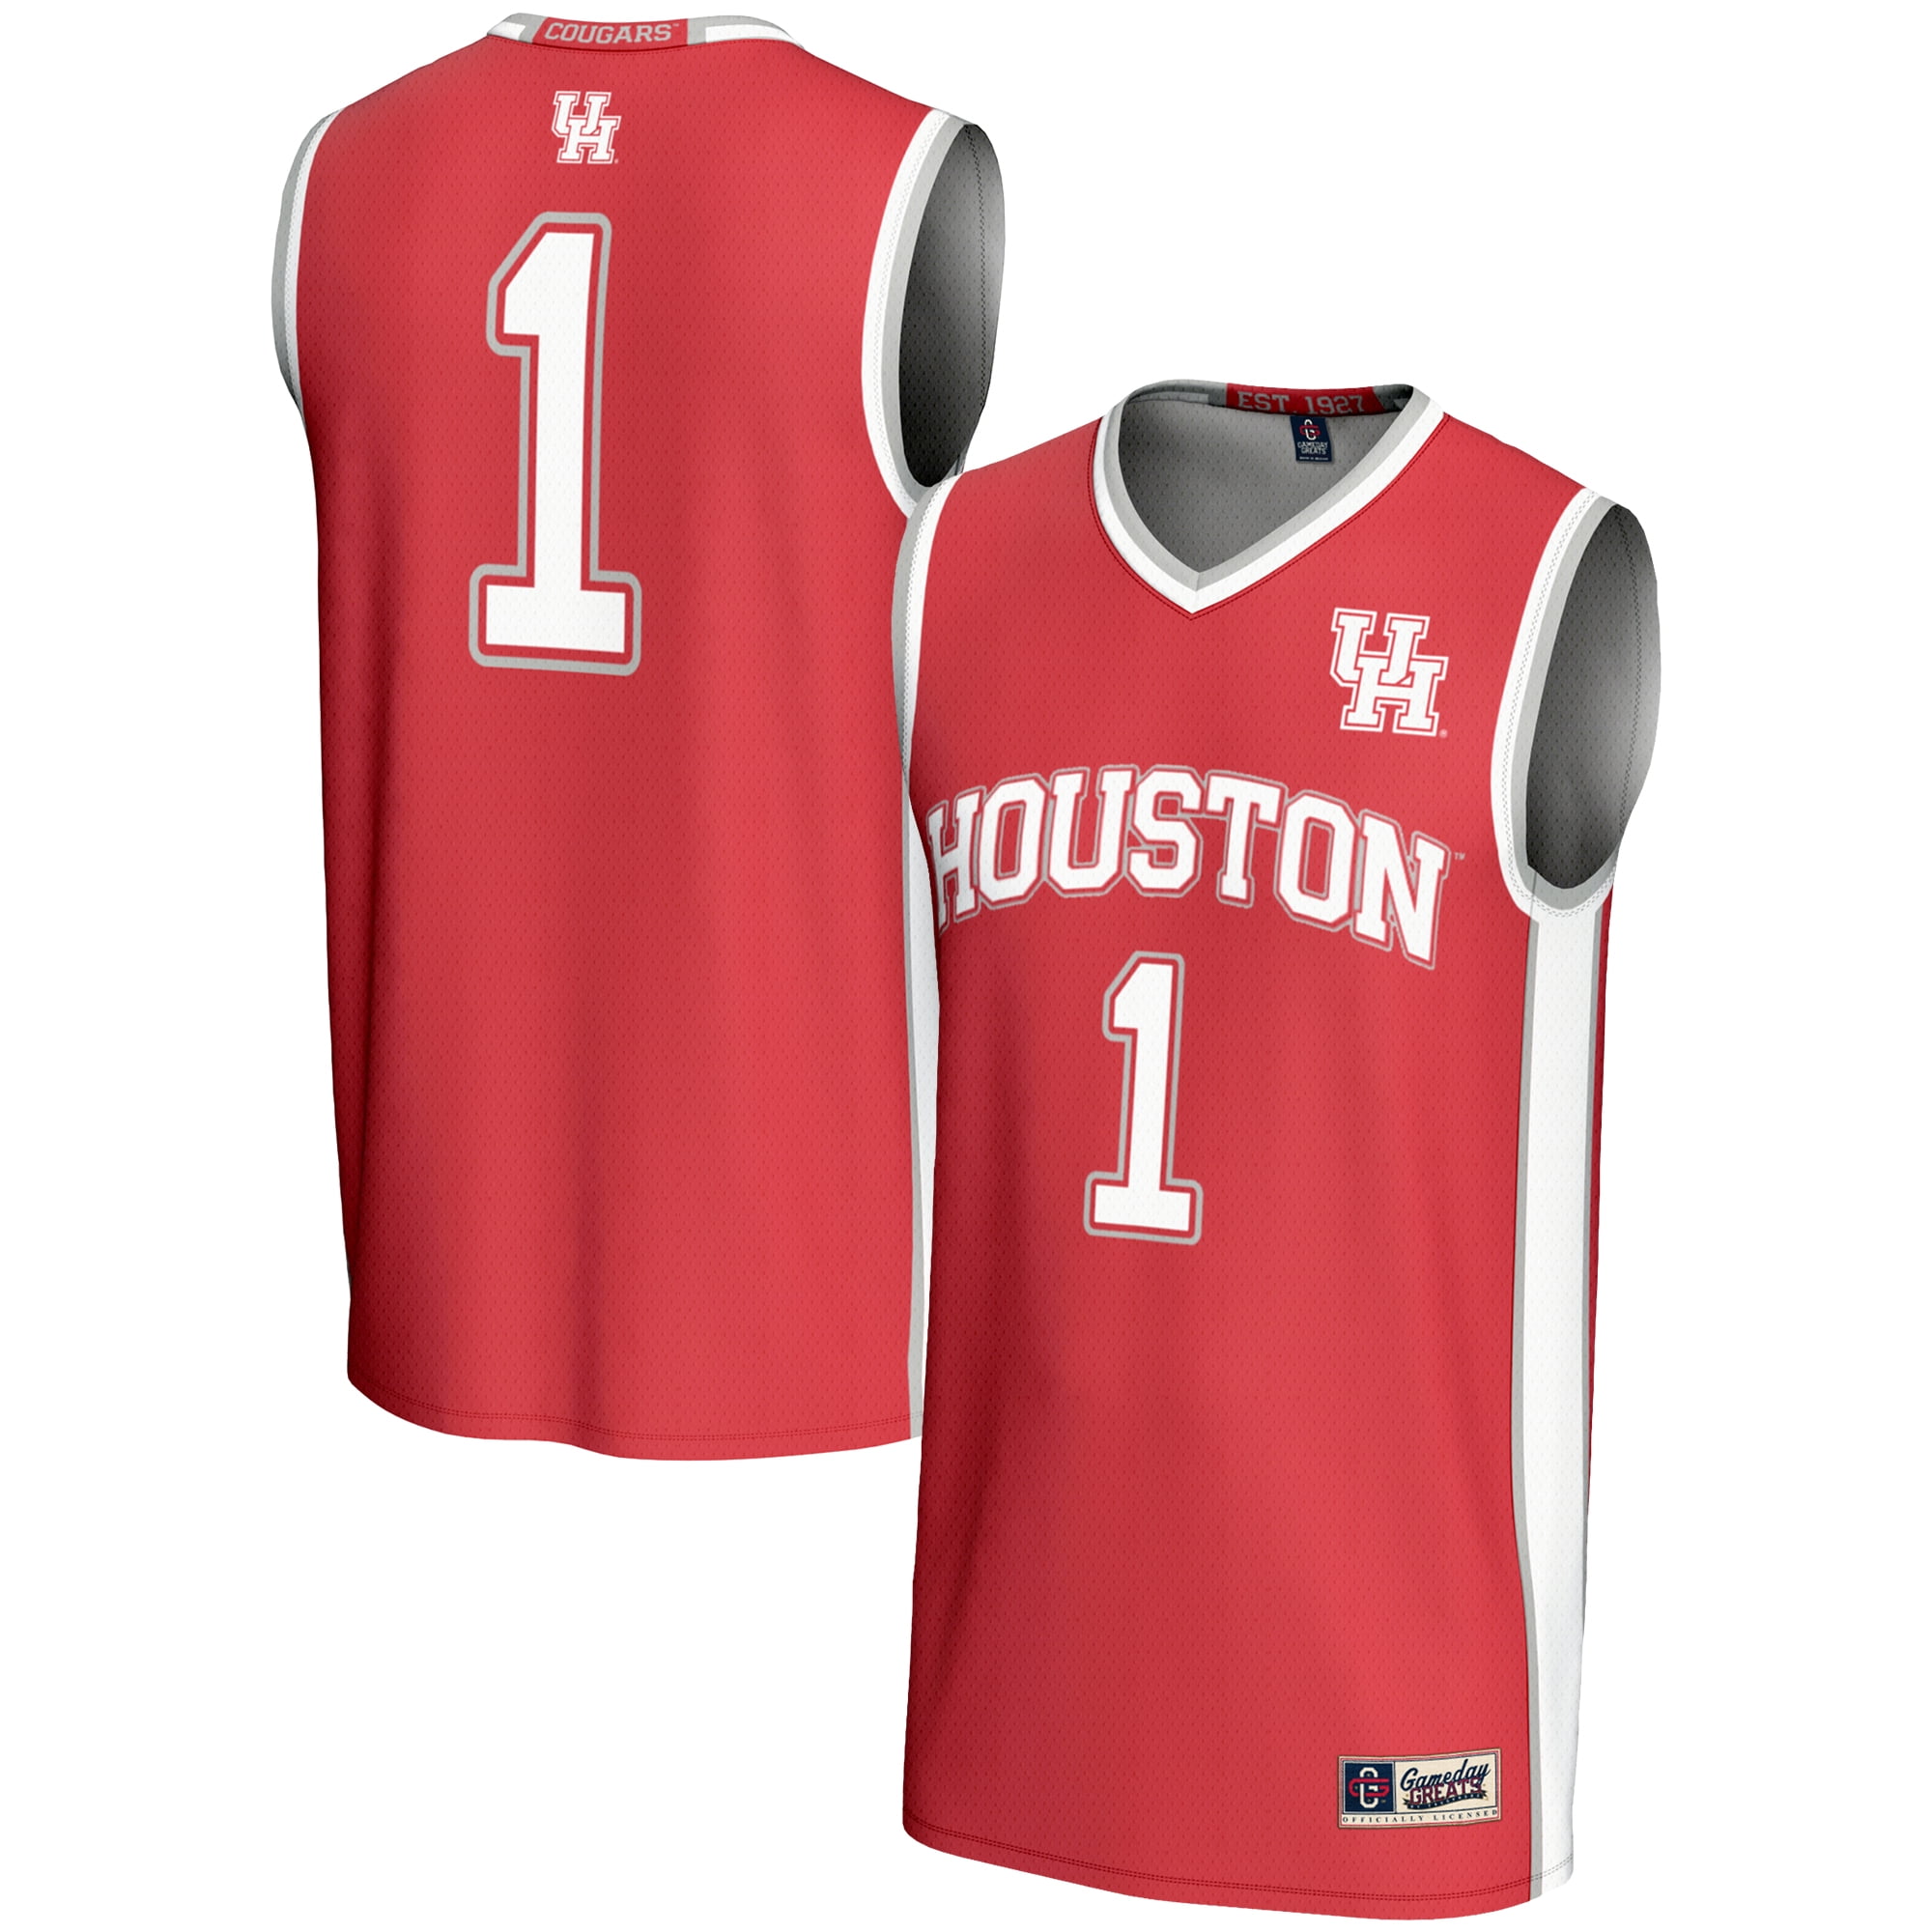 Houston Cougars basketball jersey